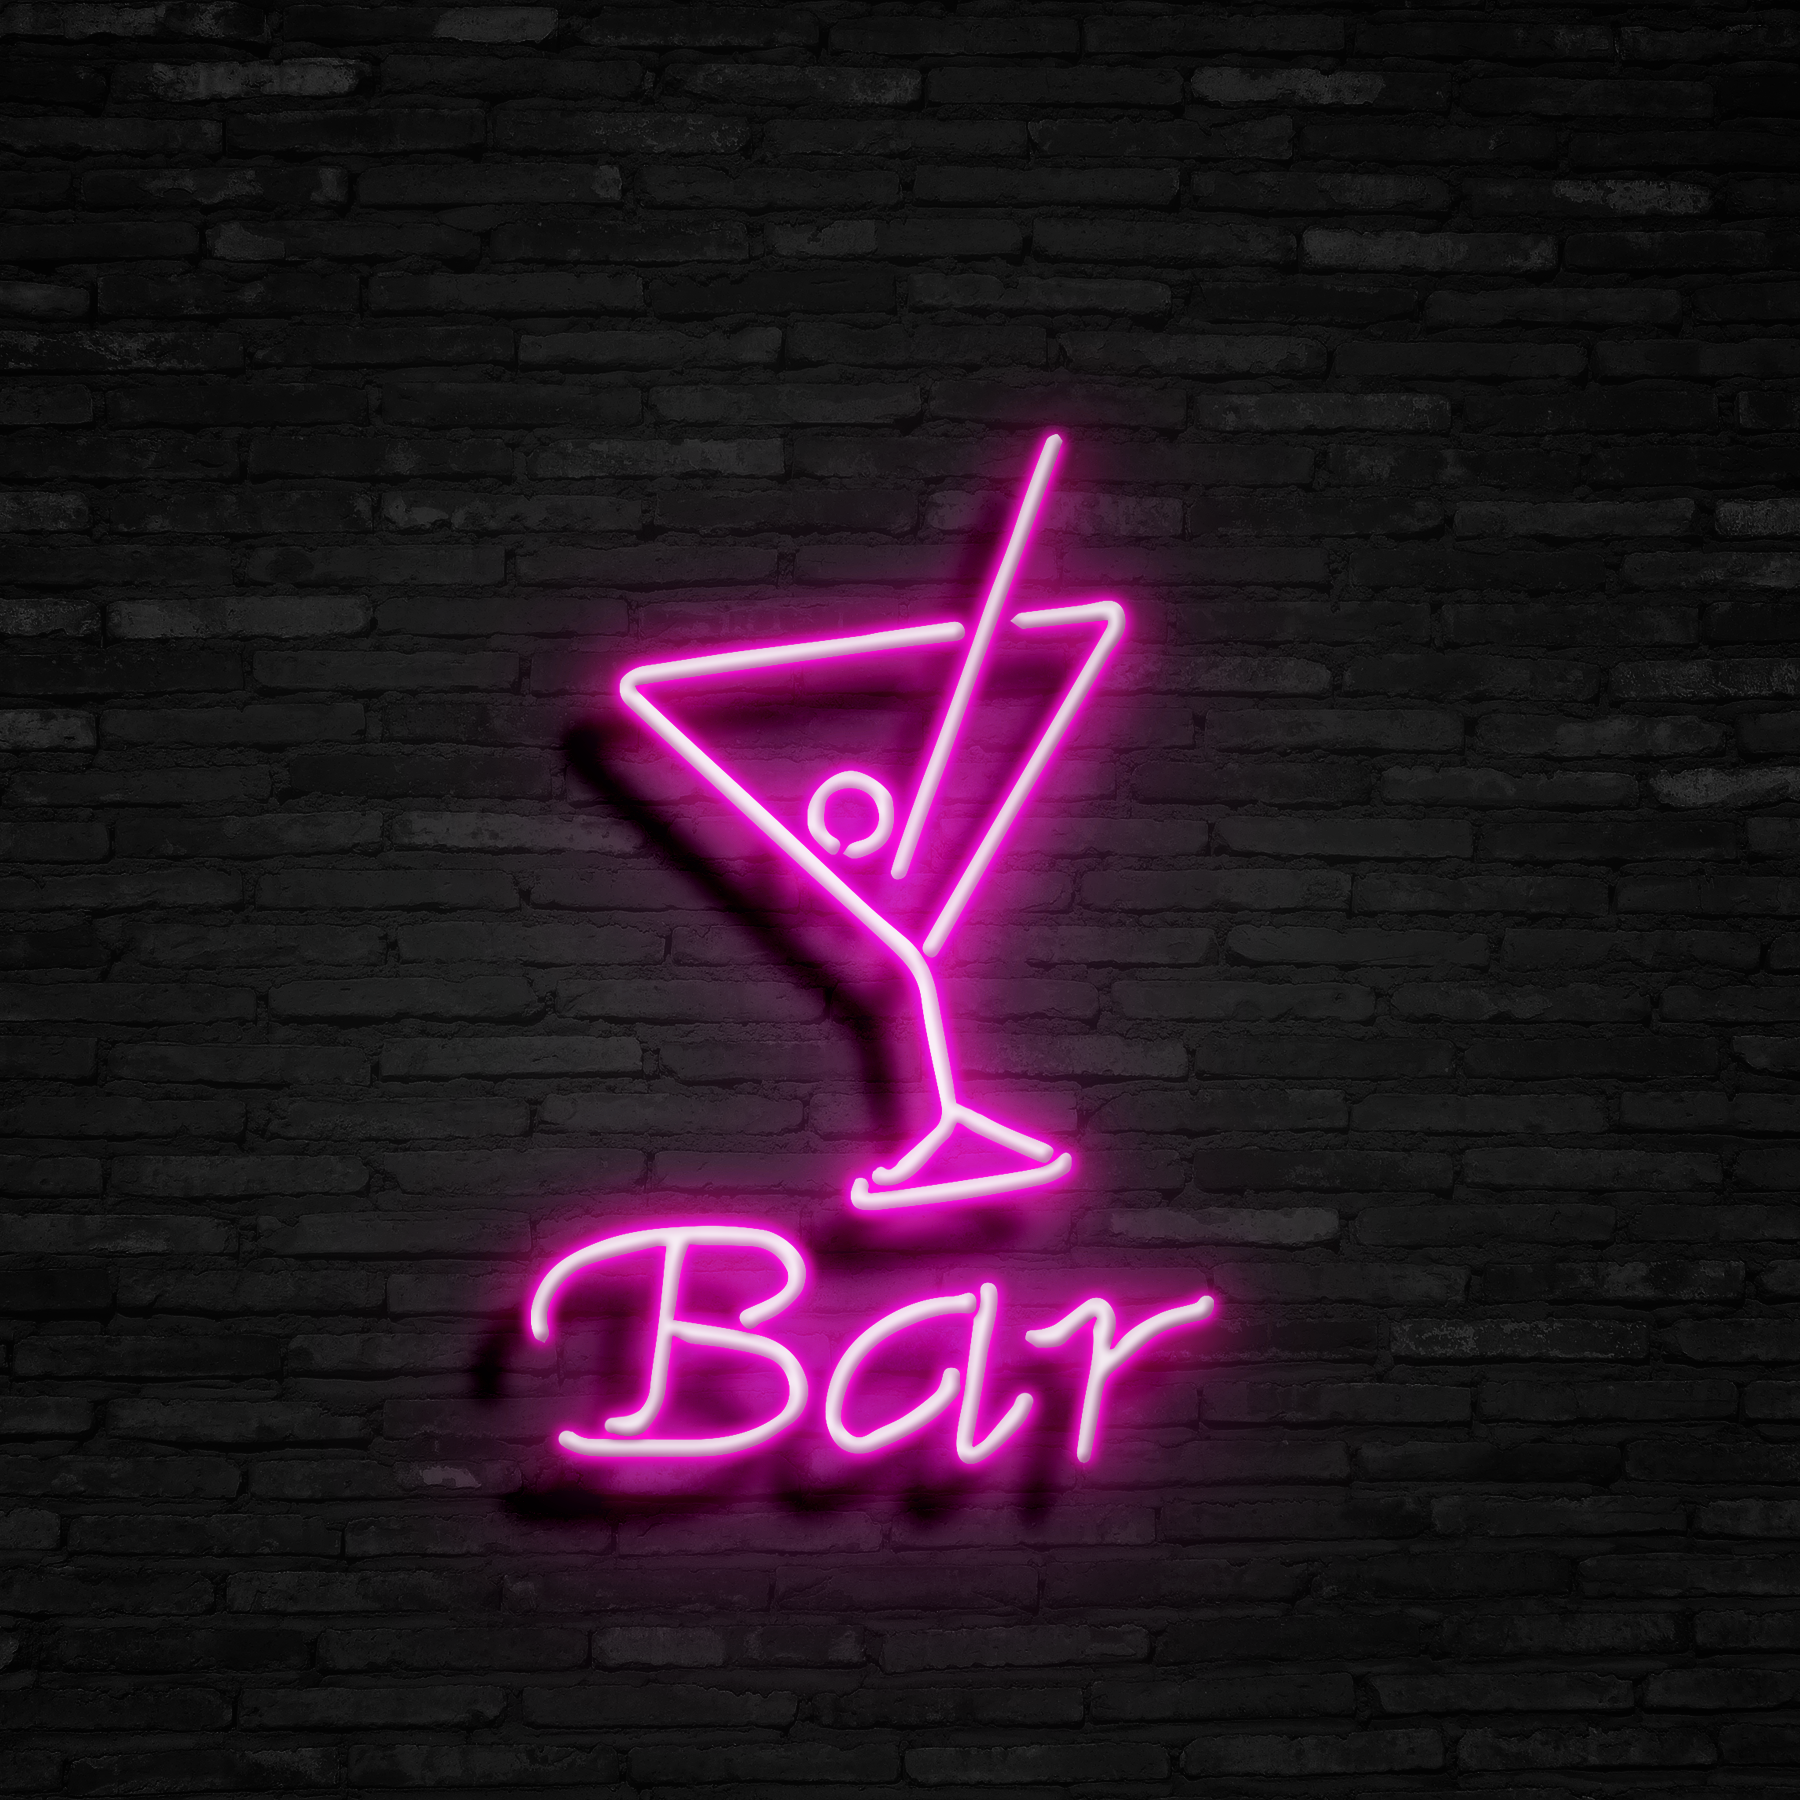 Bar - Neon Sign Instagobo